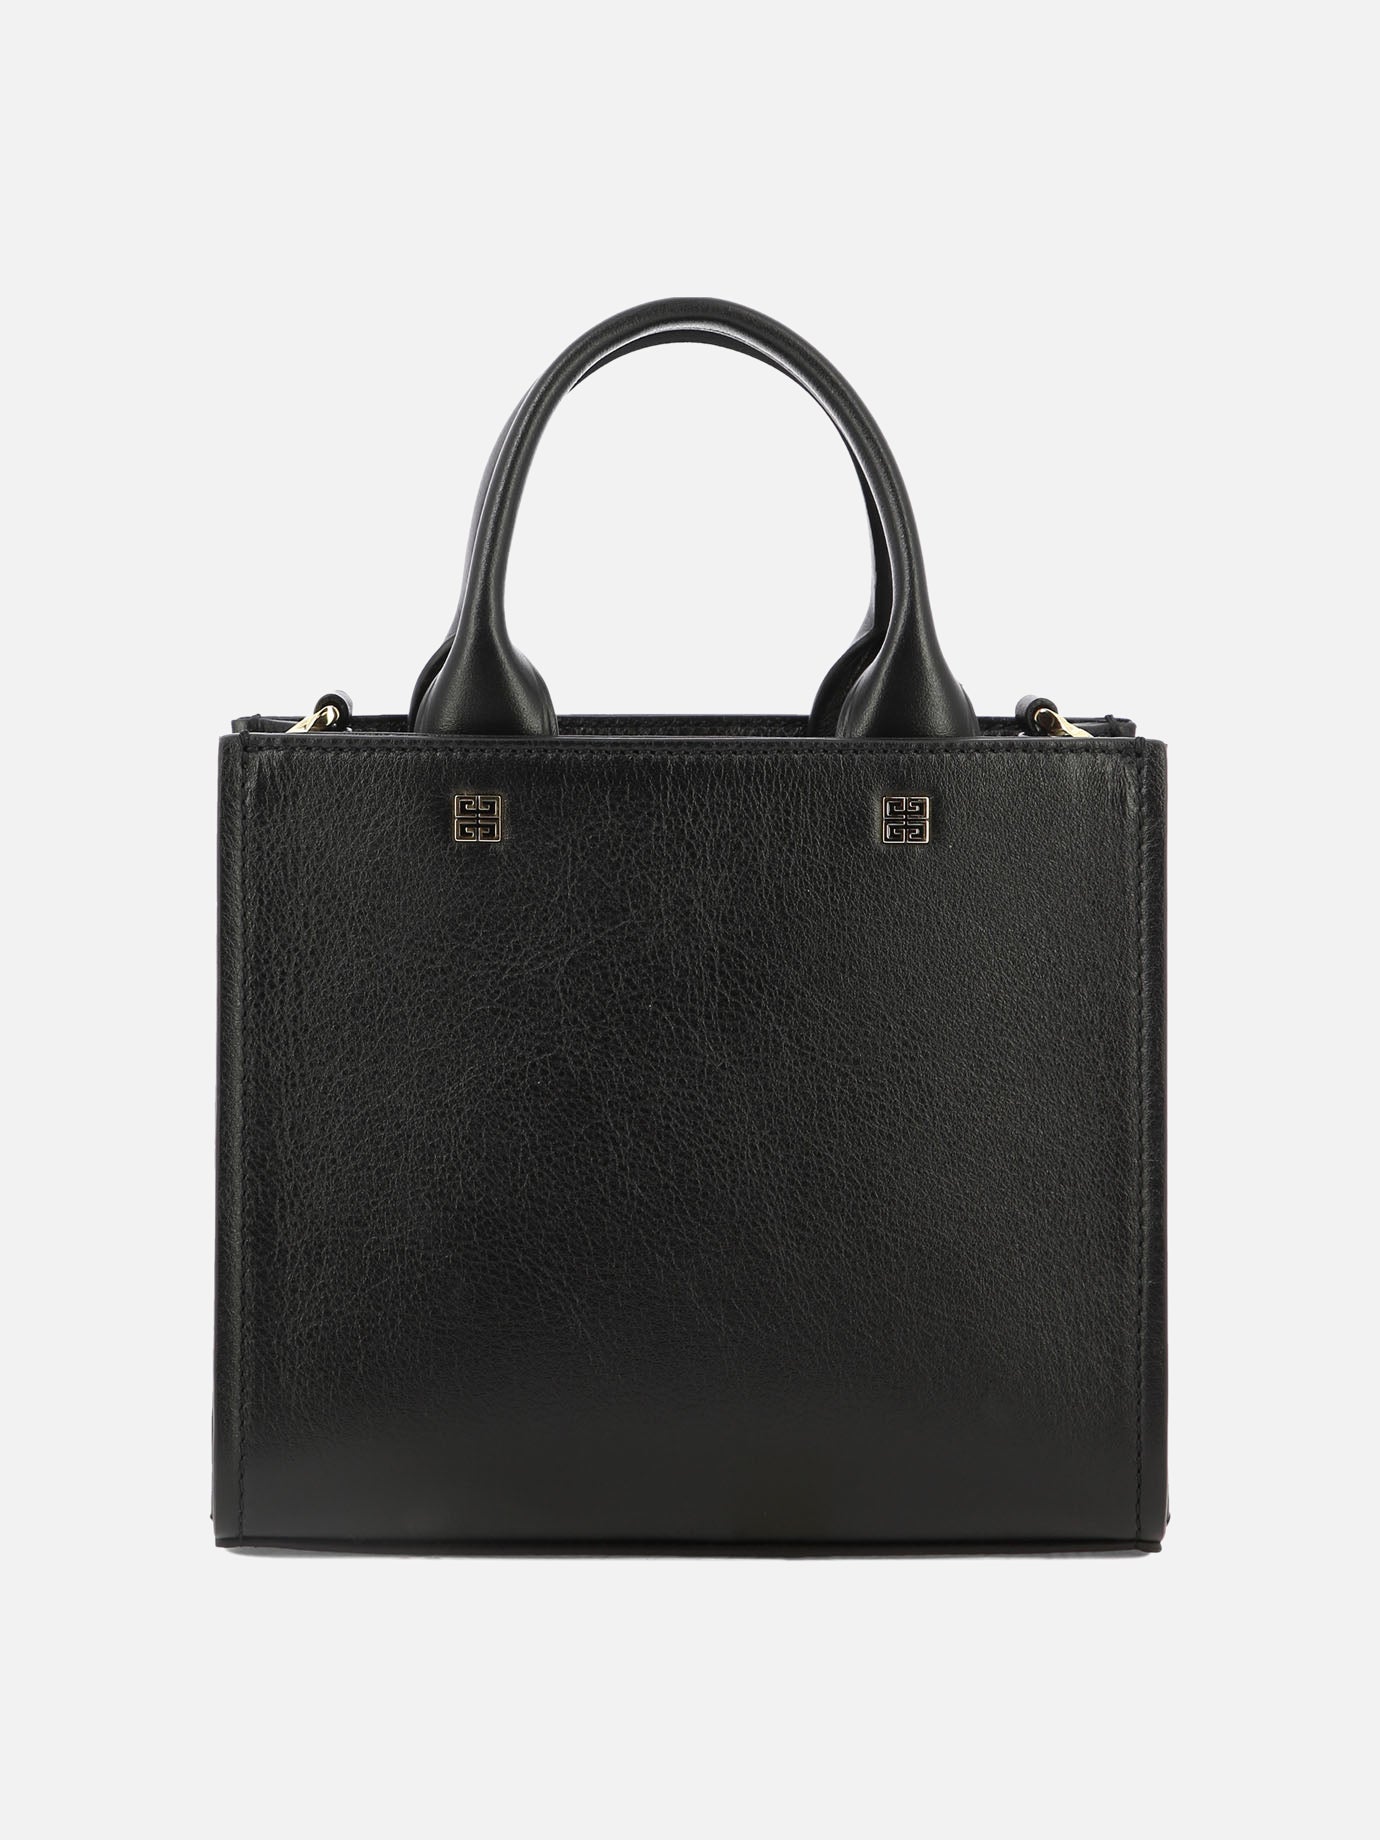 "Mini G Tote" handbag